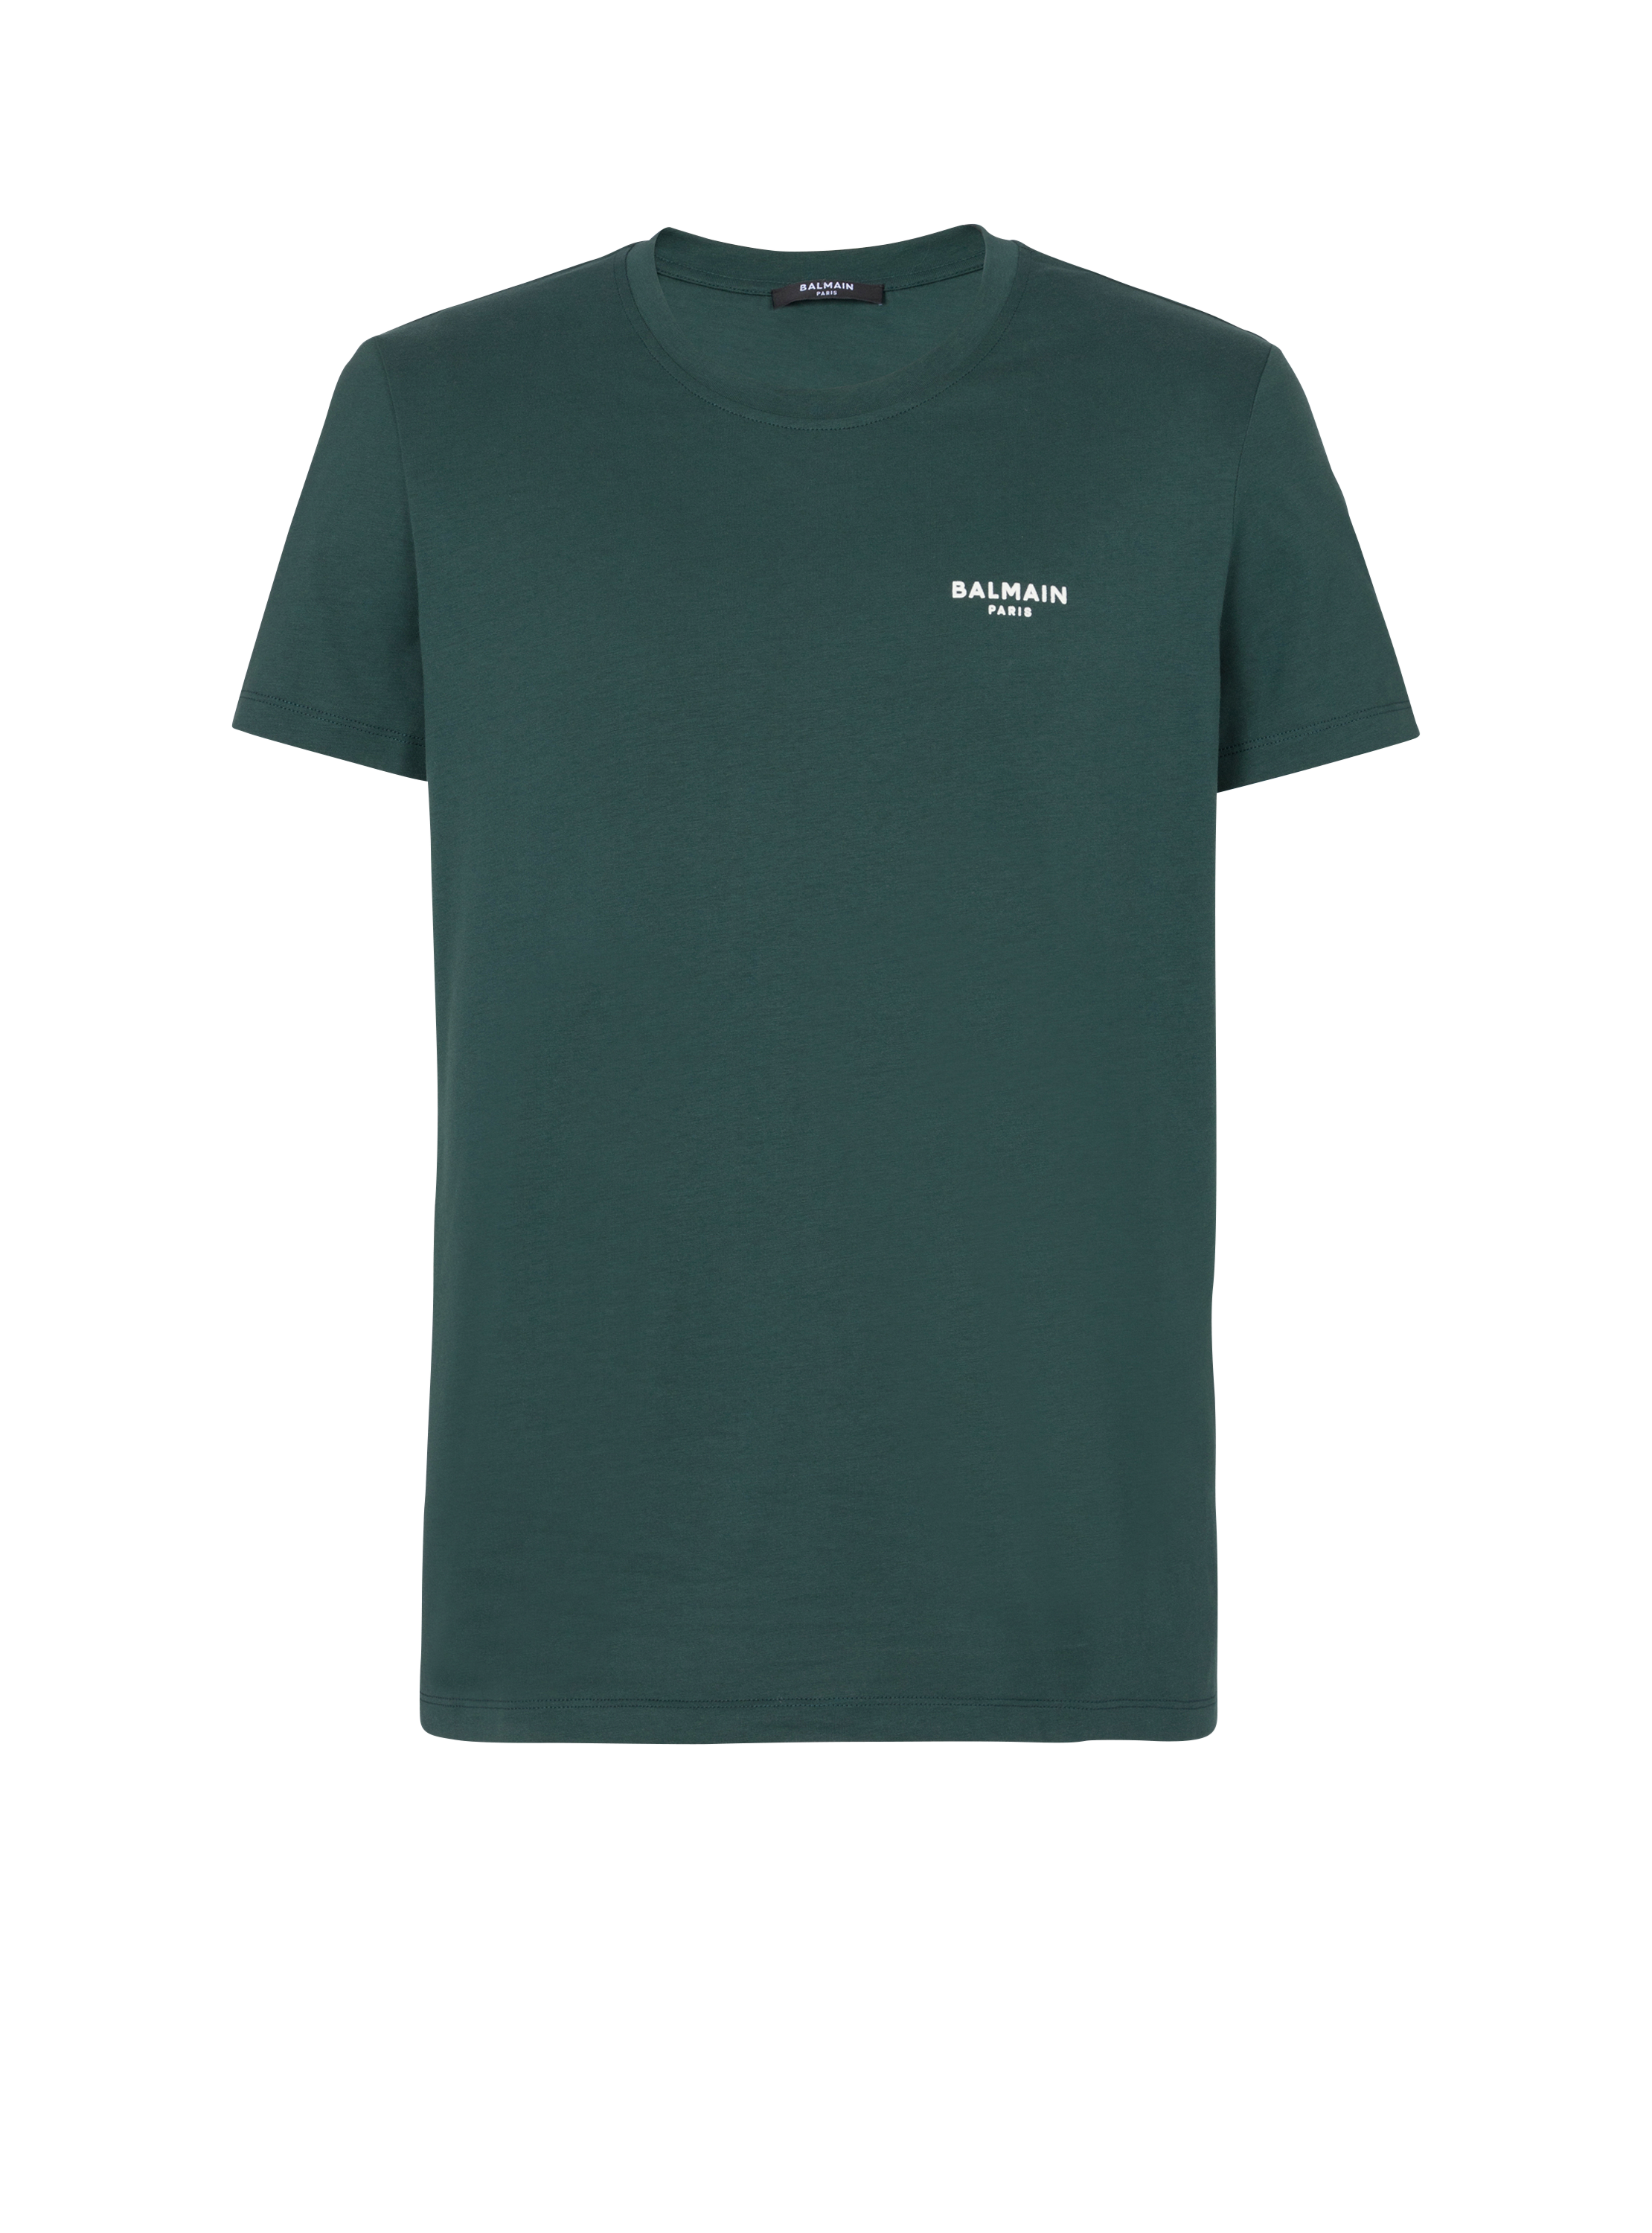 Camiseta con logotipo de Balmain serigrafiado, verde, hi-res